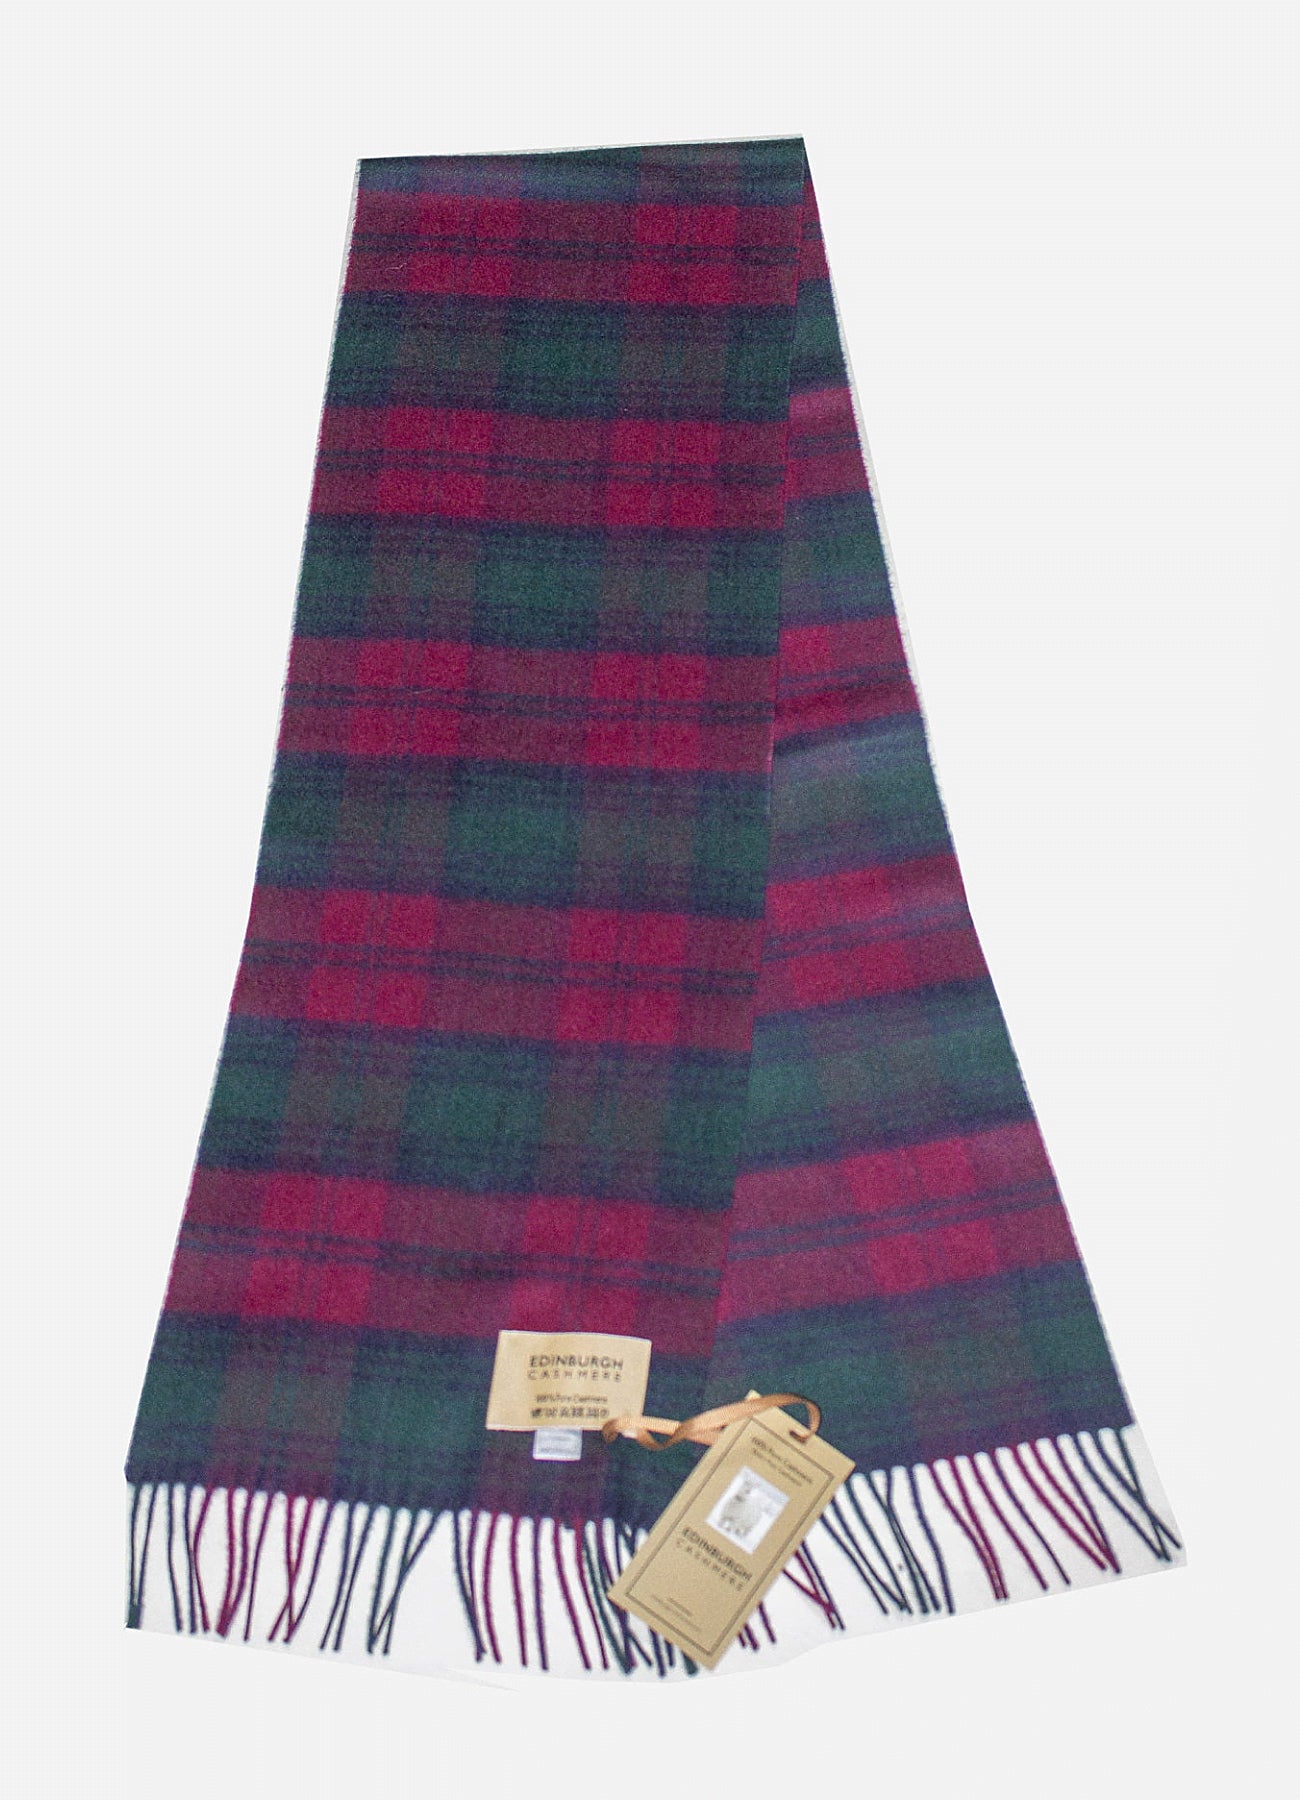 Lindsay - スコットランド製スカーフ 100% ピュア カシミア